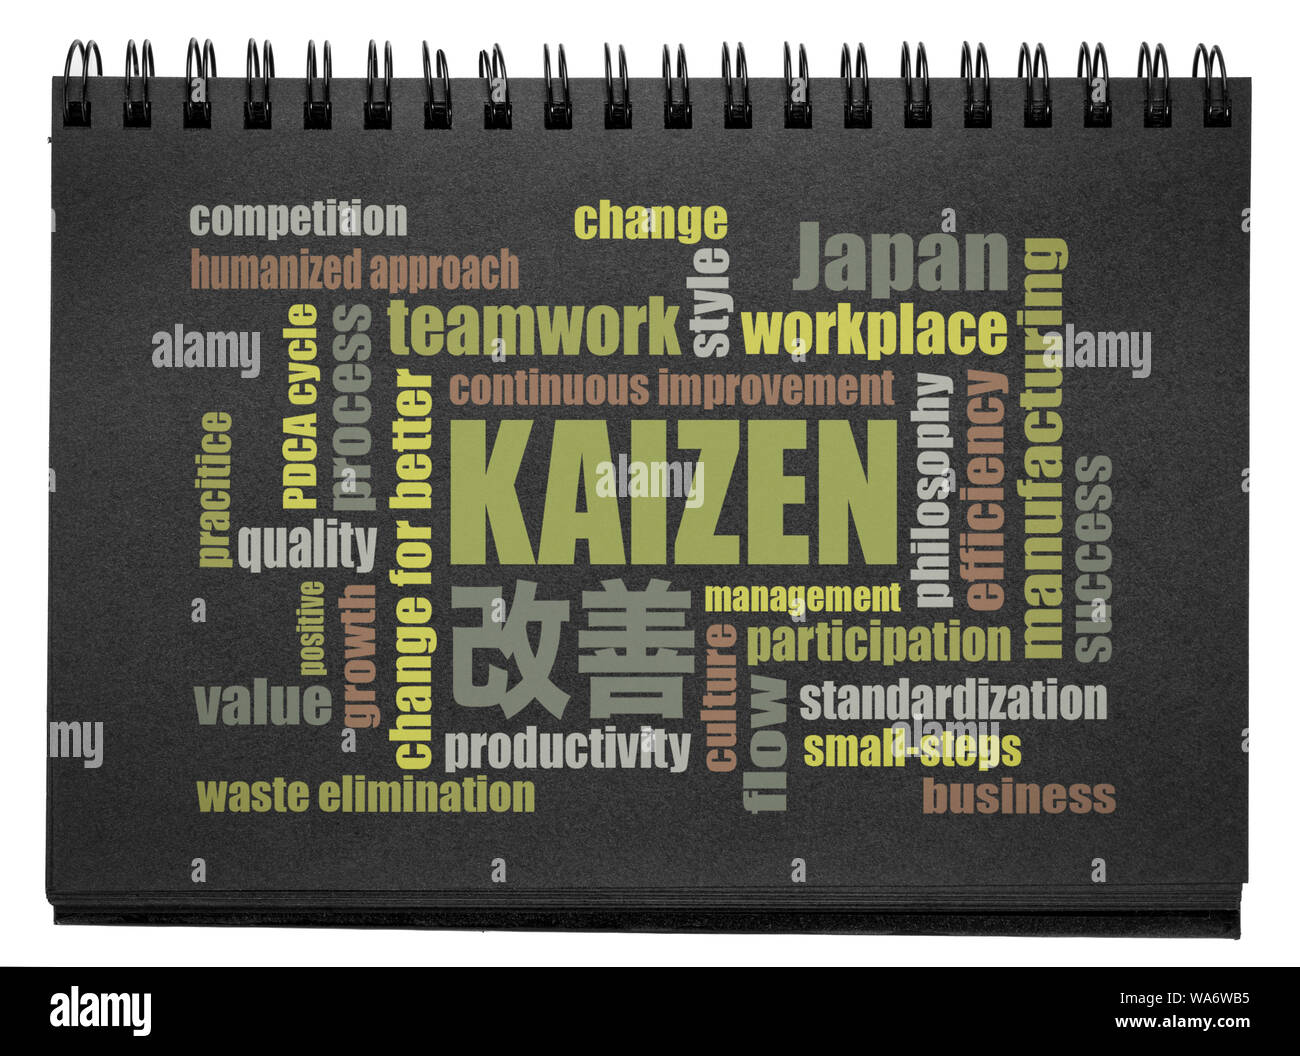 Kaizen - Japanese continuous improvement concept - word cloud  in a black paper sketchbook Stock Photo